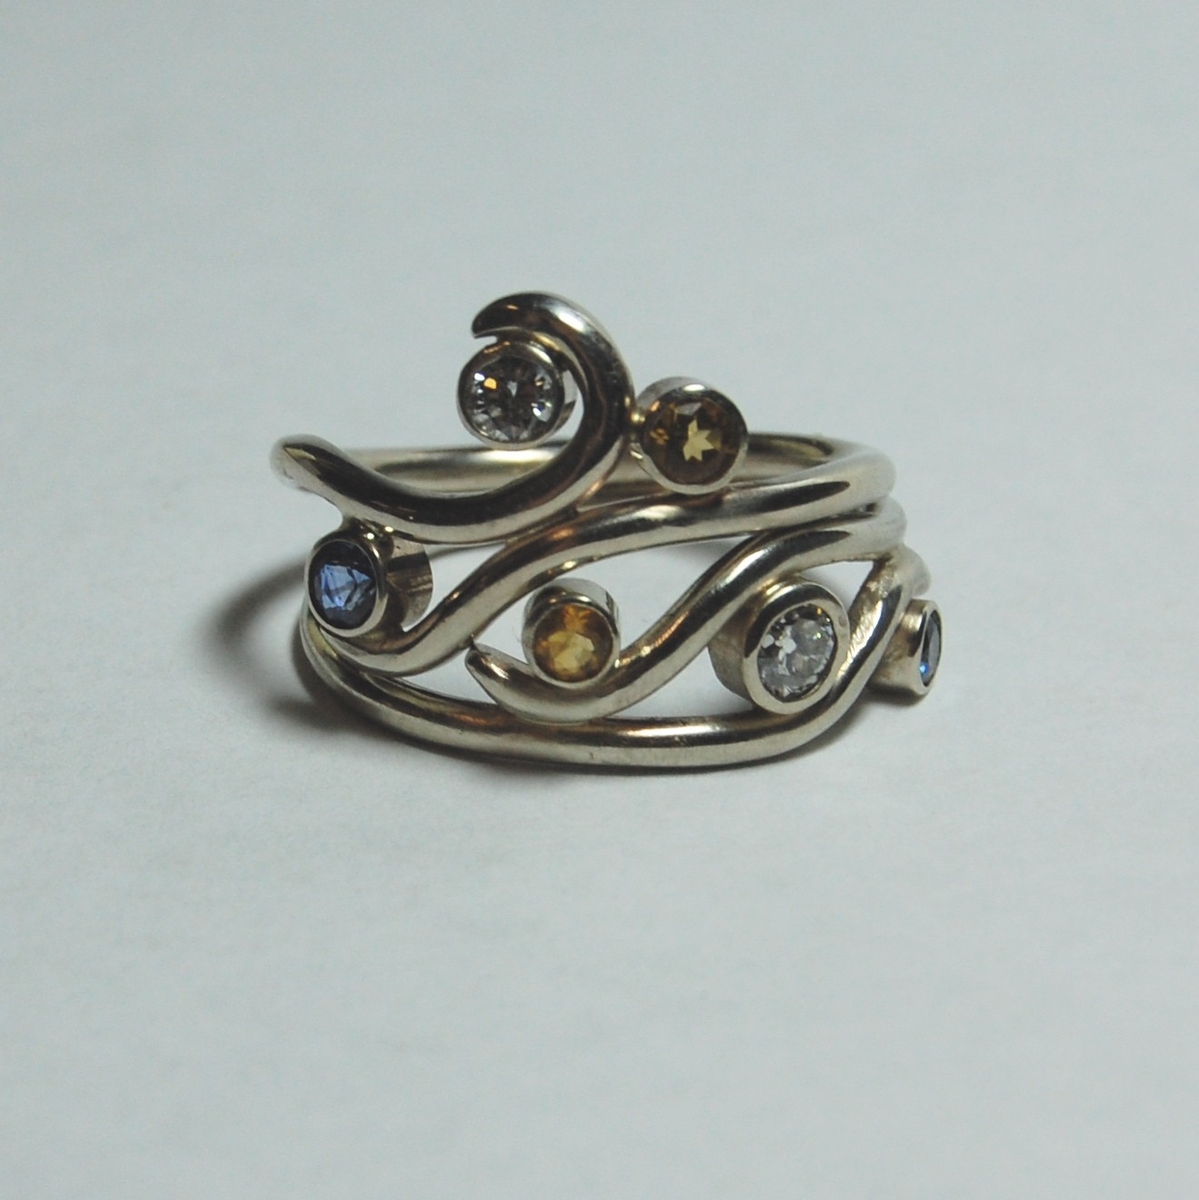 For Maya Wedding Ring Set by e. scott originals at CustomMade.com